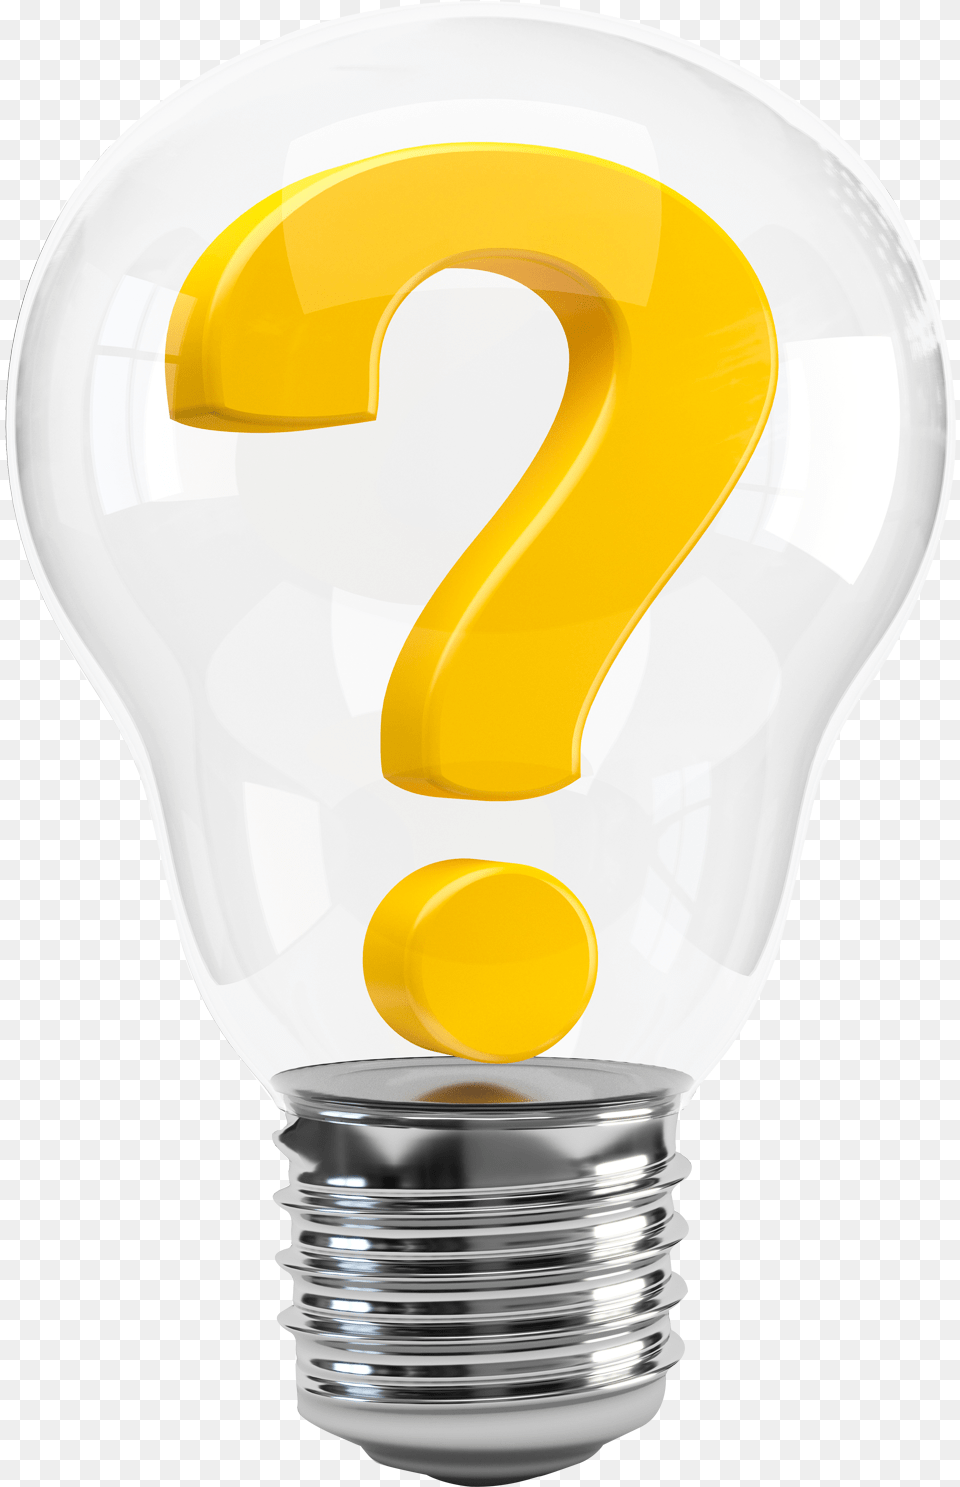 Idea Images Pngpix Transparent Light Bulb With Question Mark, Lightbulb Free Png Download